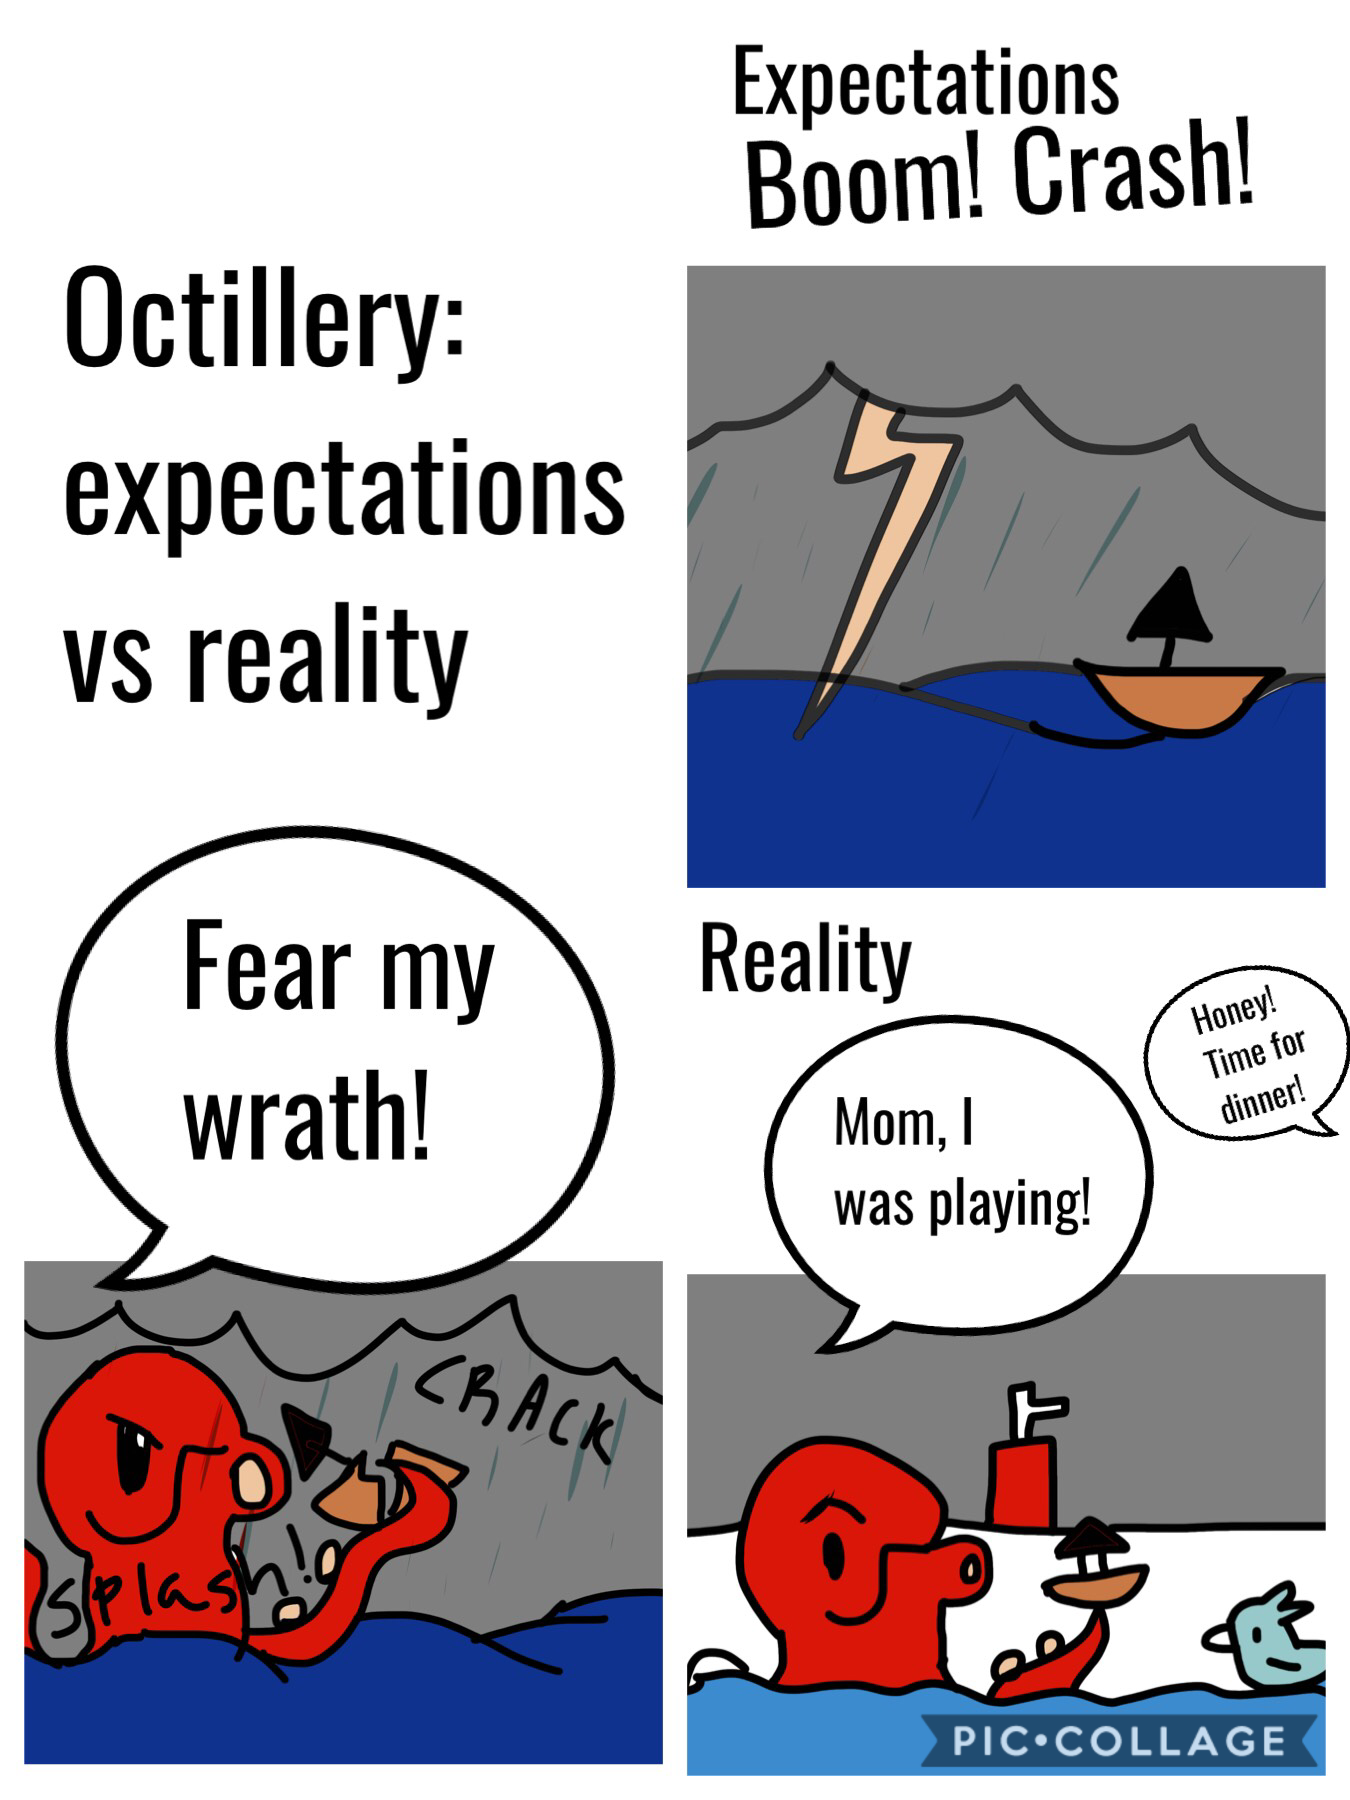 Octillery: expectations vs reality 